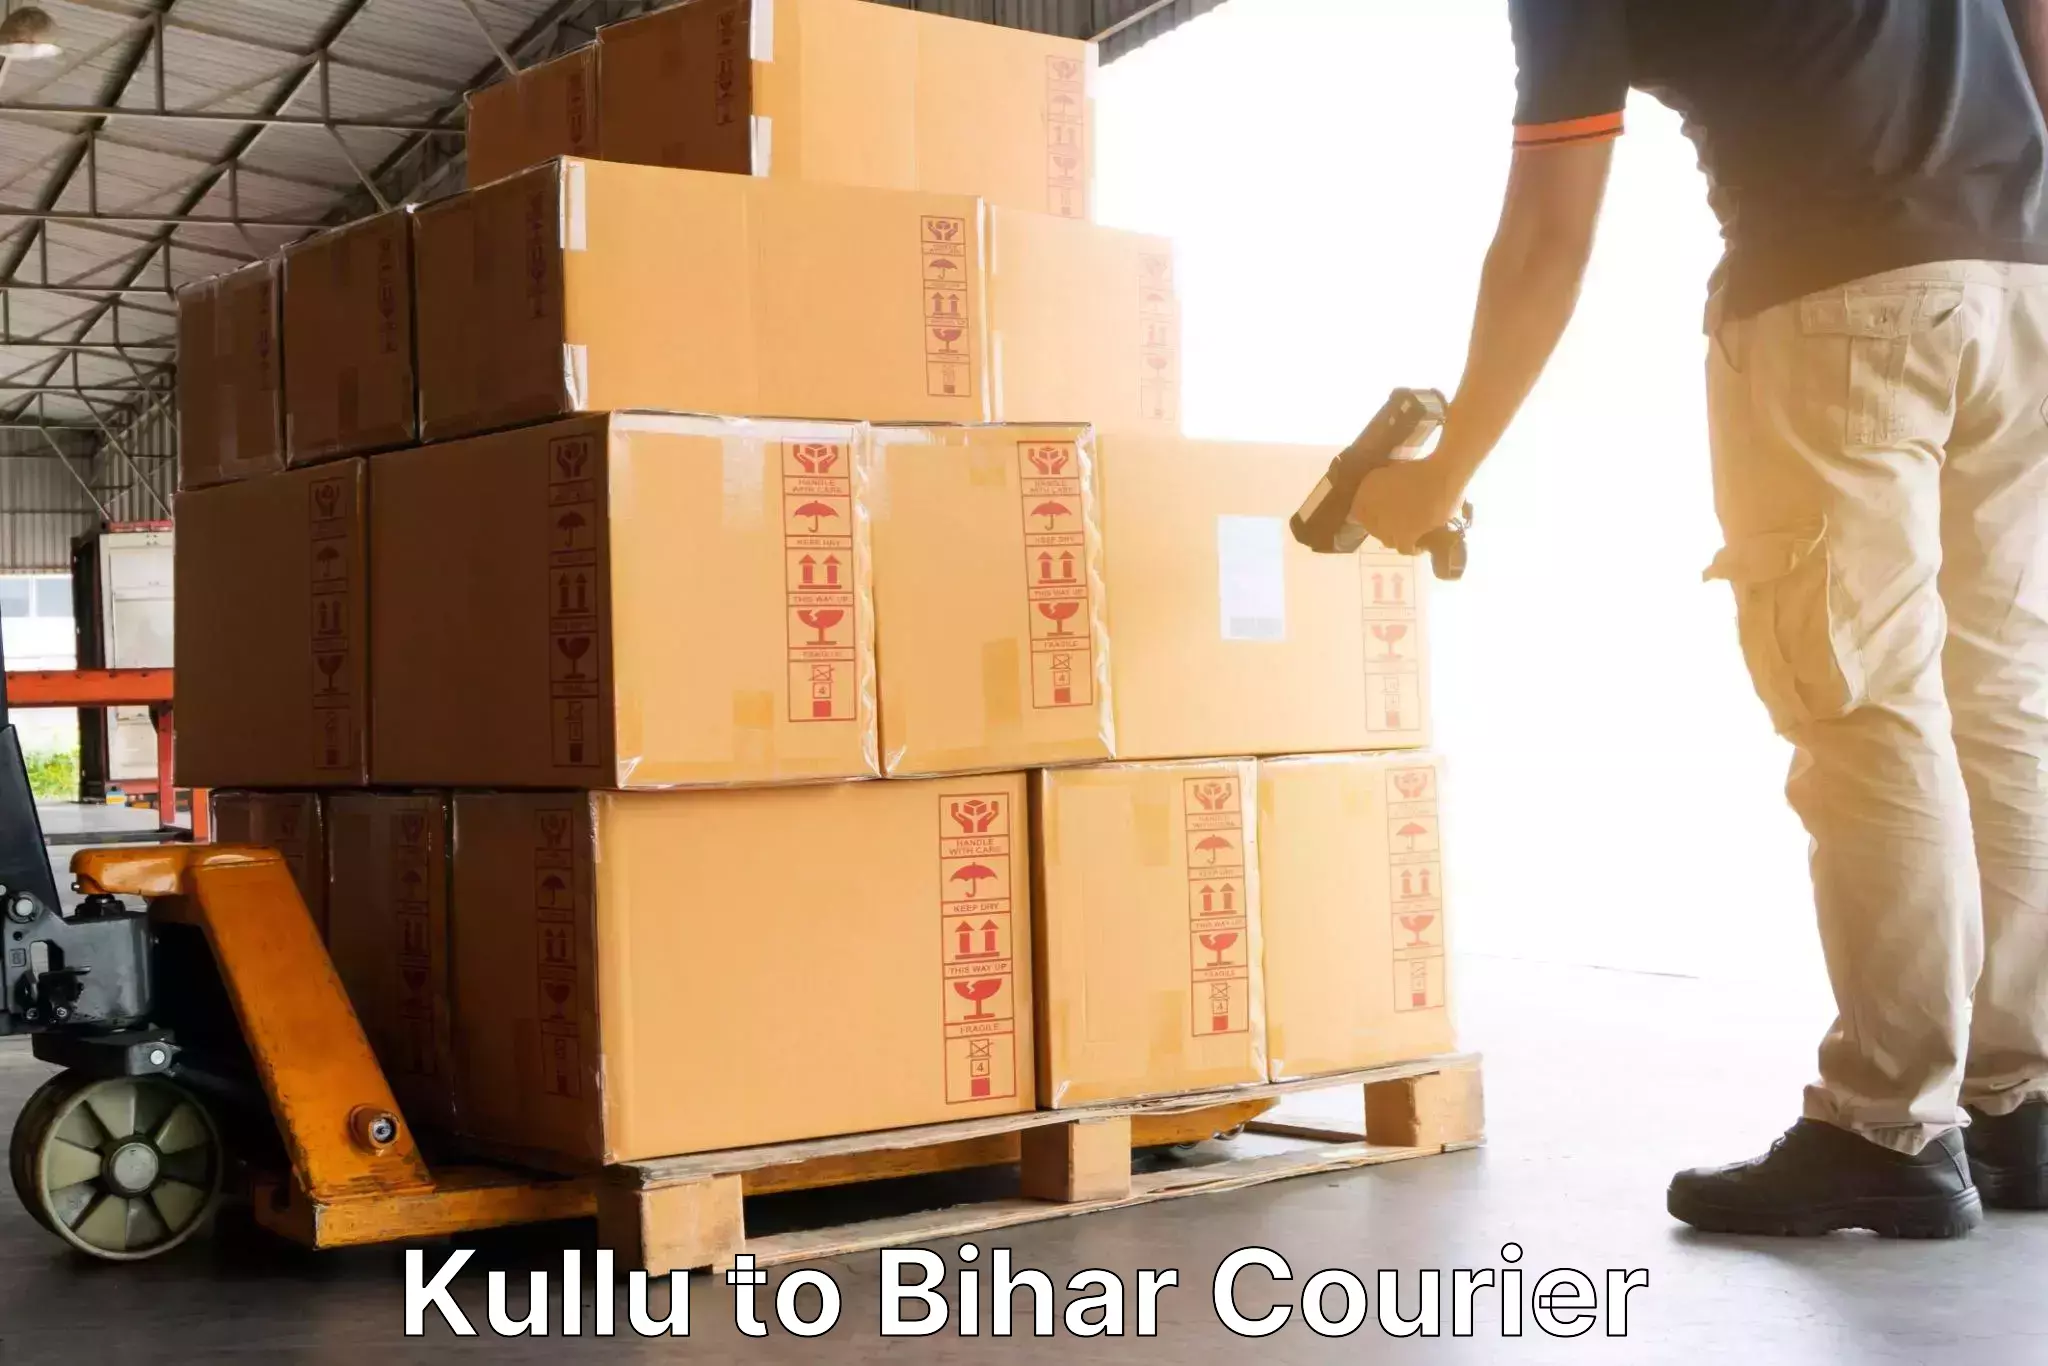 Premium courier services Kullu to Sandesh